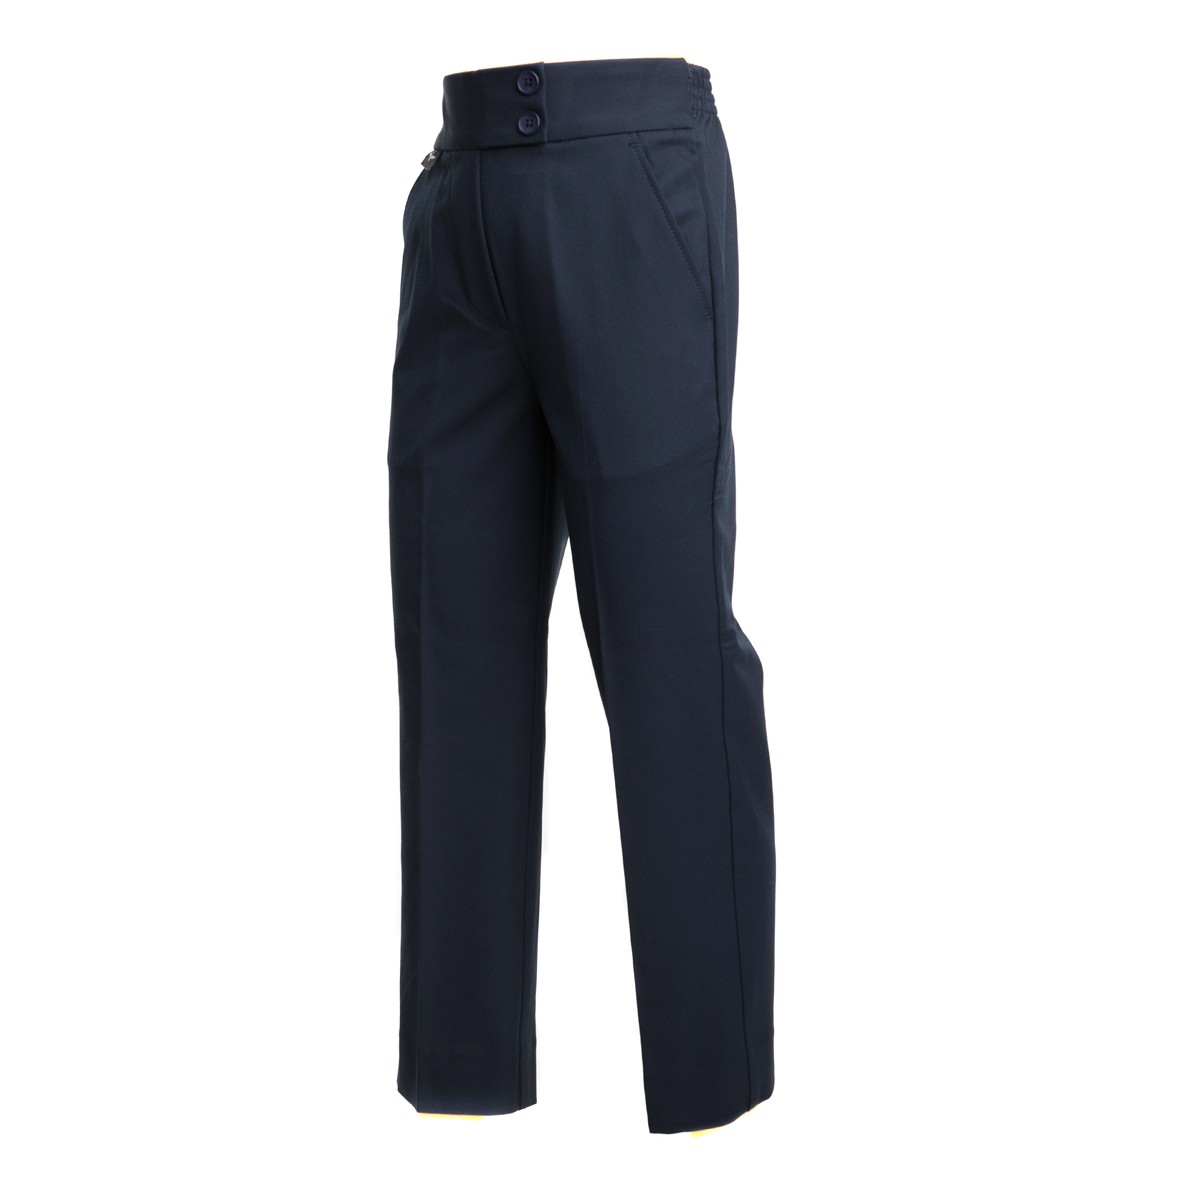 School Uniform Trousers Navy Blue Adjustable Waist Kids Size 6 Pants NEW!!!